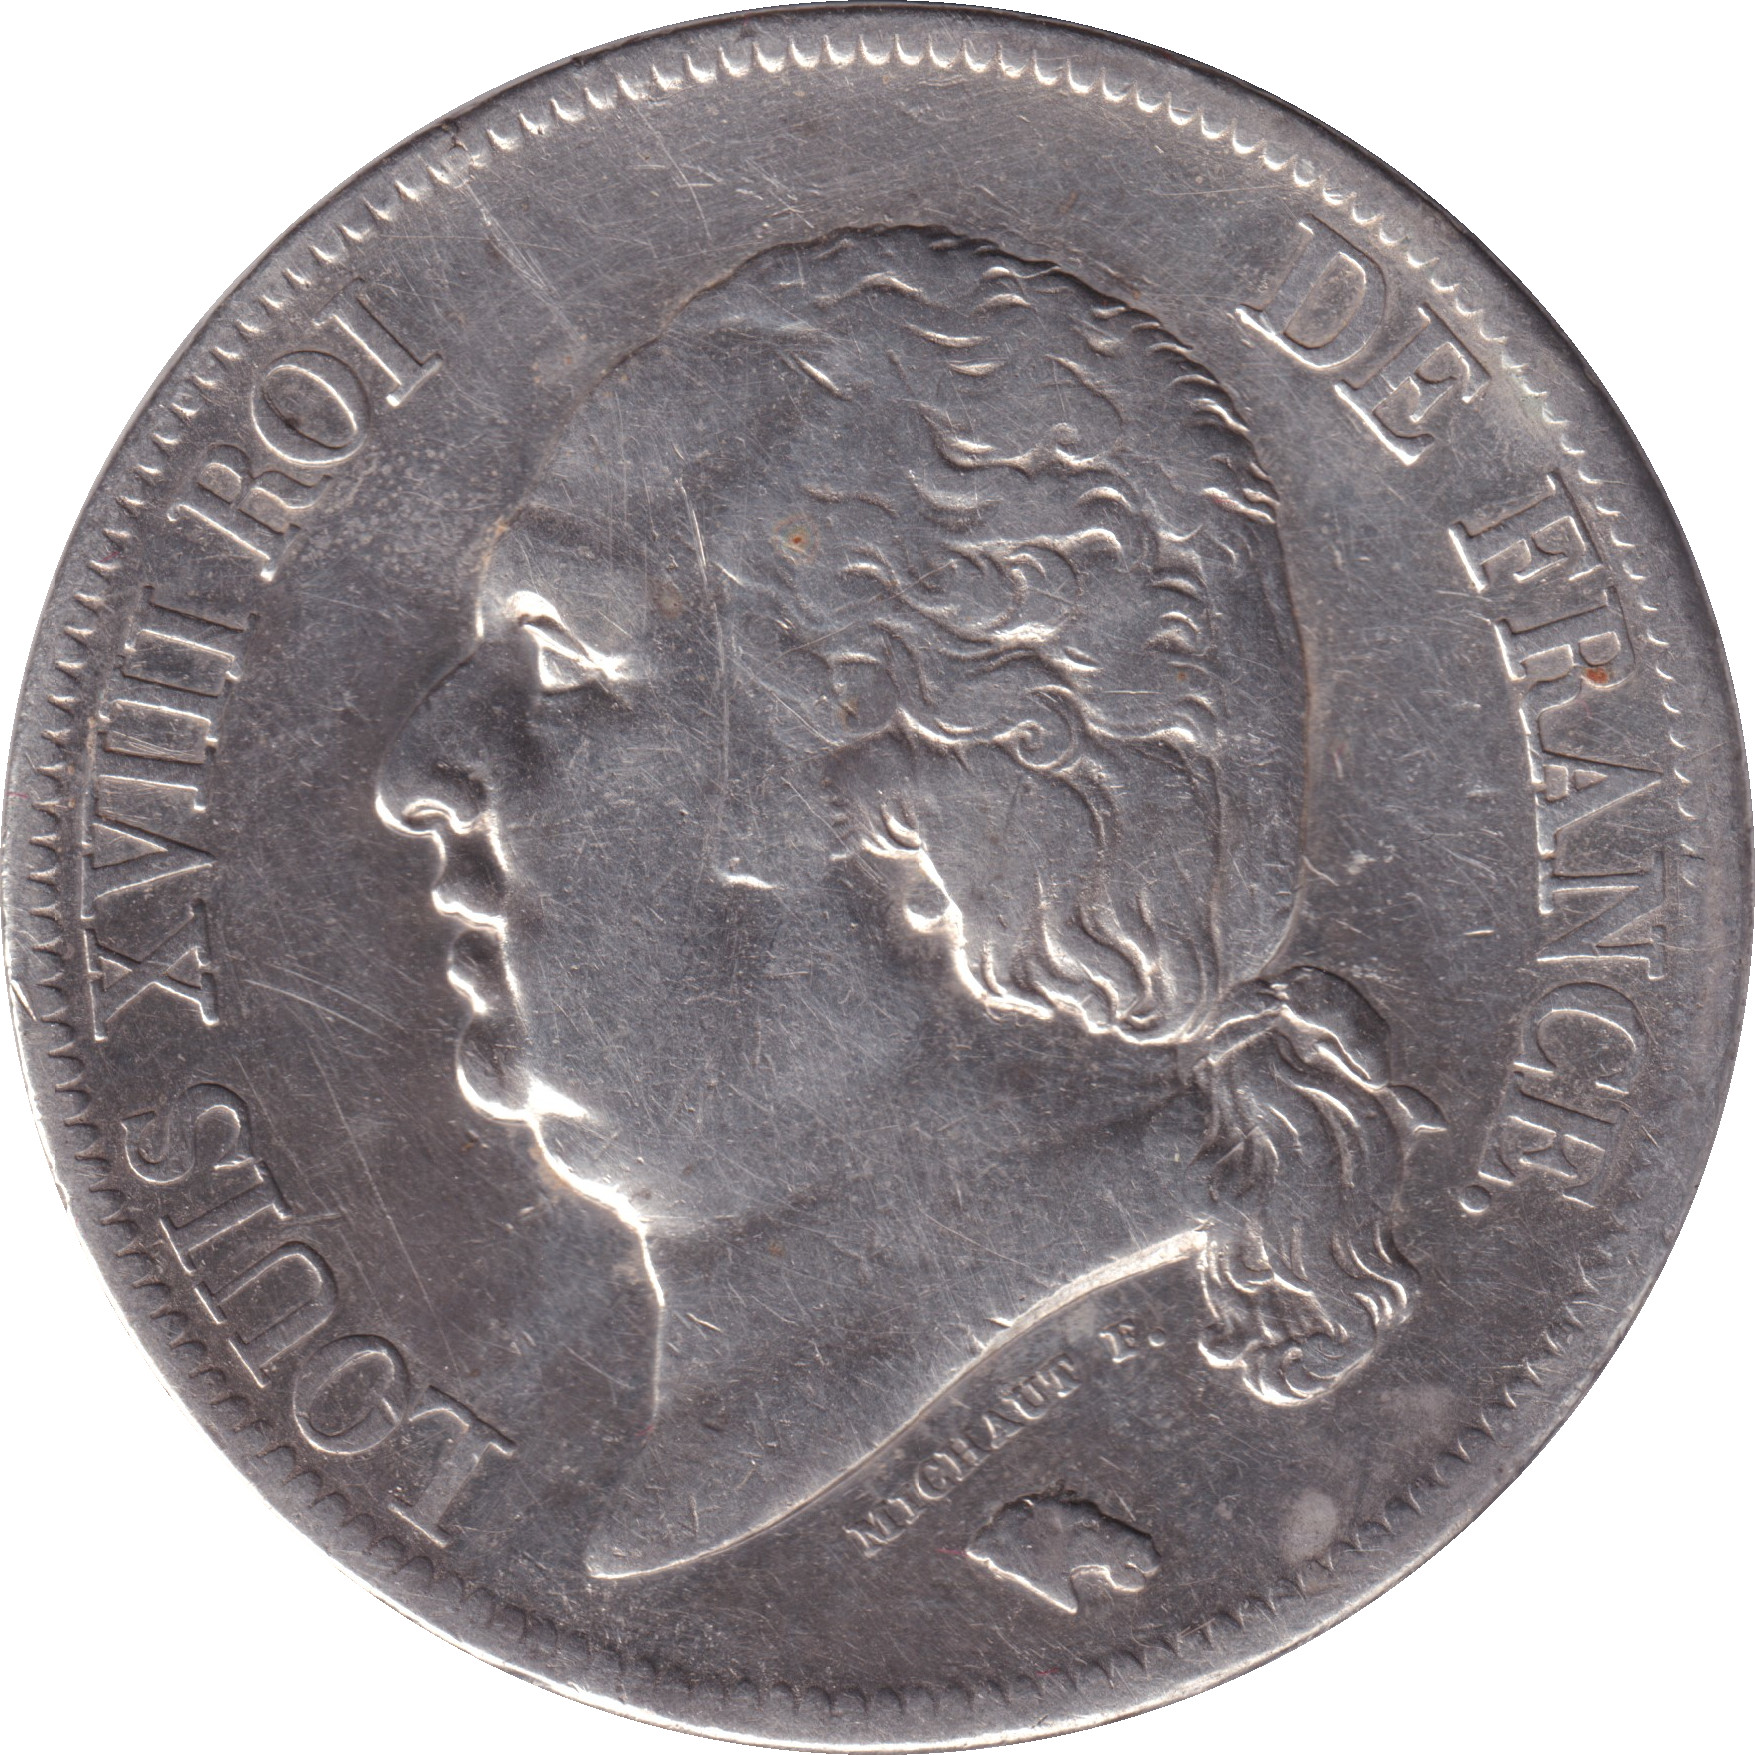 5 francs - Louis XVIII - Bare head